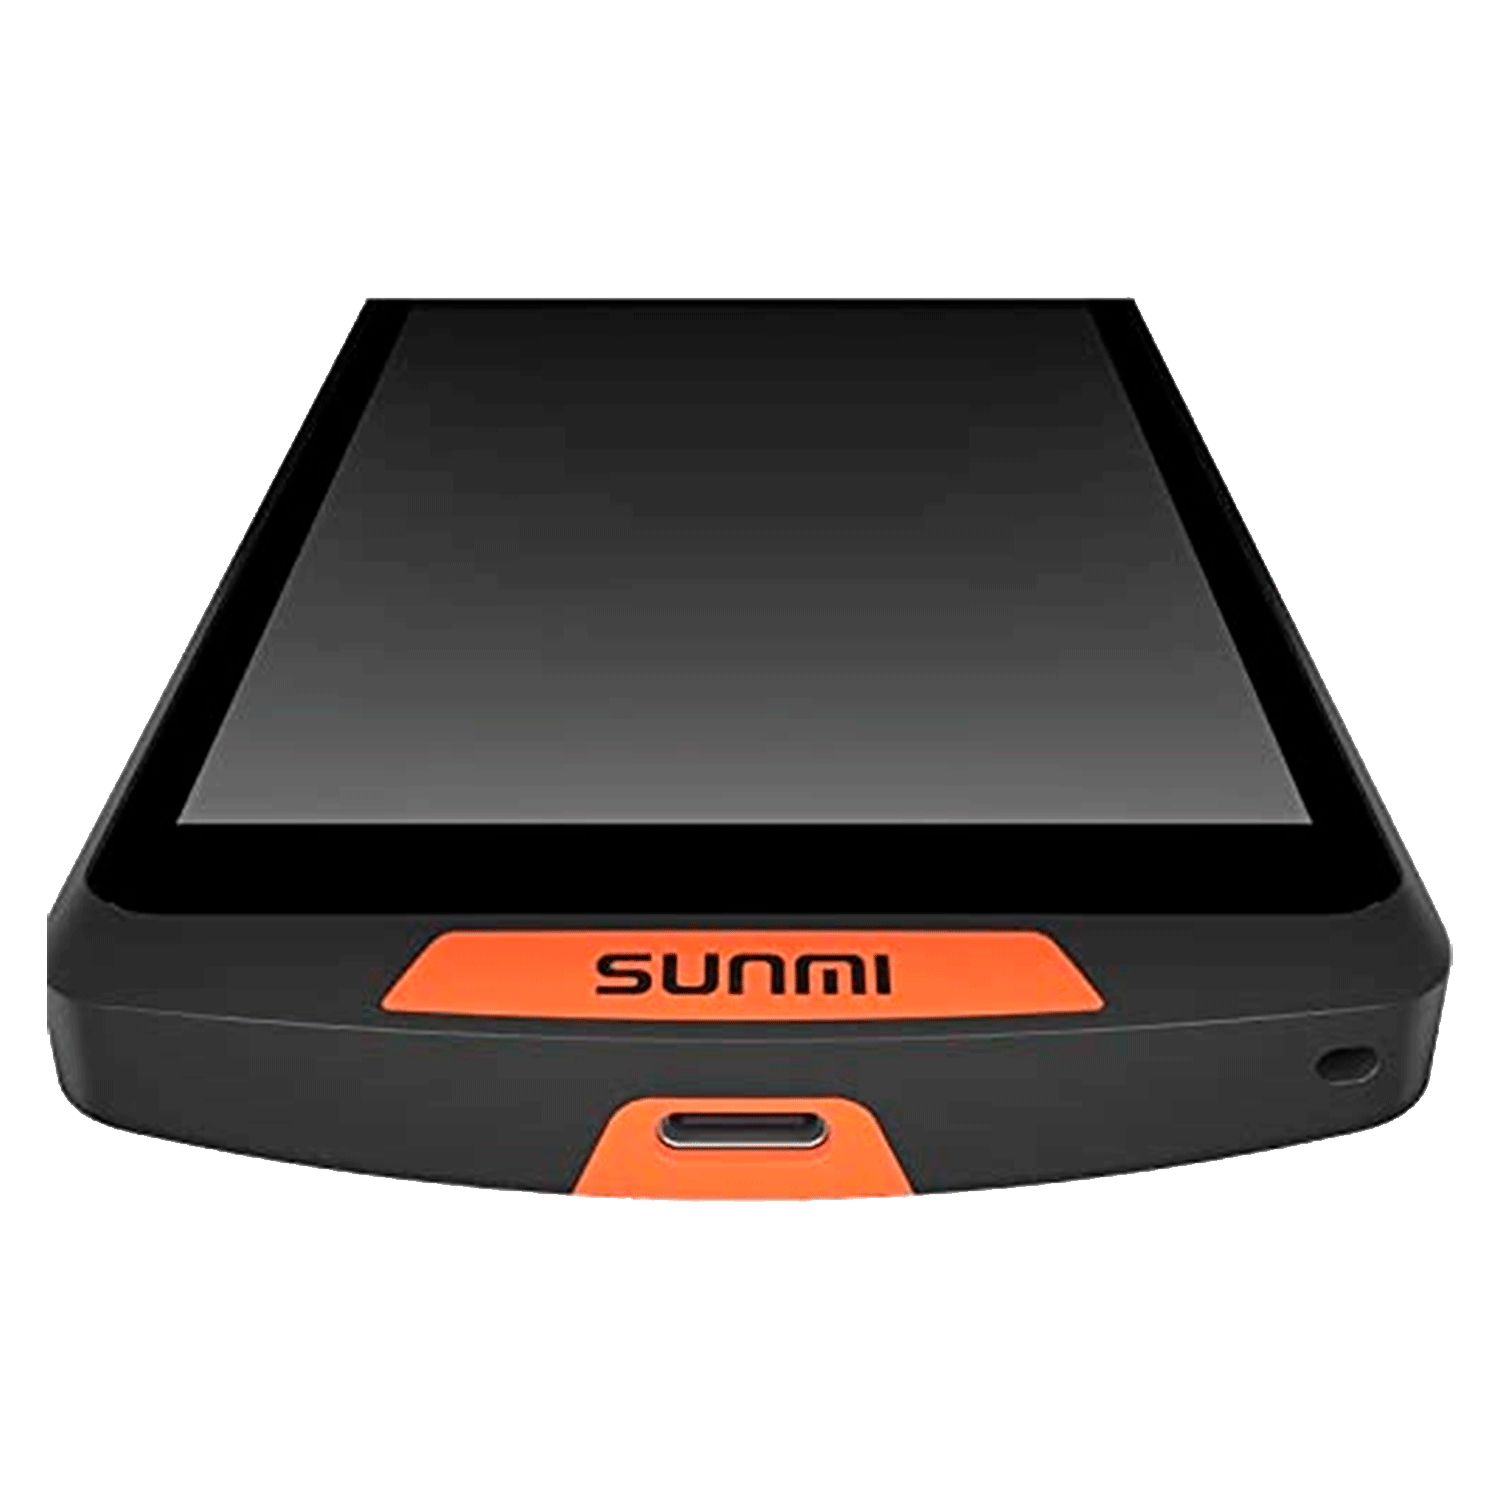 Terminal Portátil Sunmi M2 T7821 PDA Bluetooth / Android 7.1